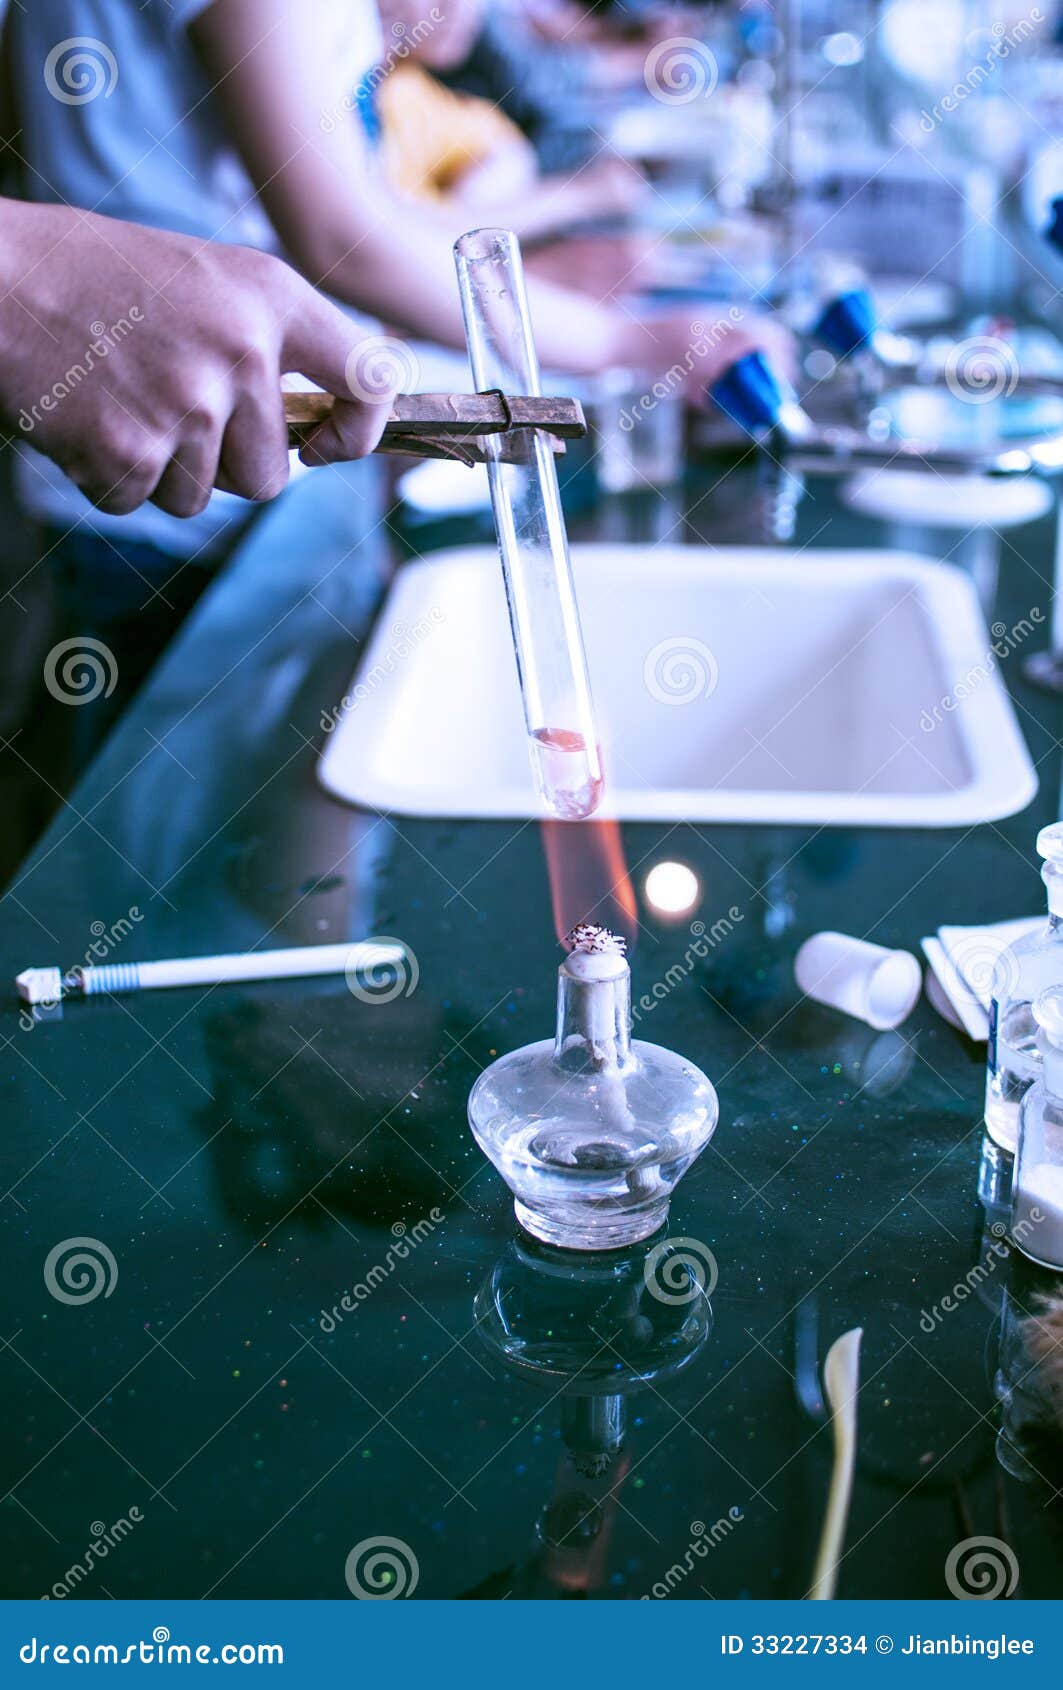 Experiment - Preparation of Sodium Chloride